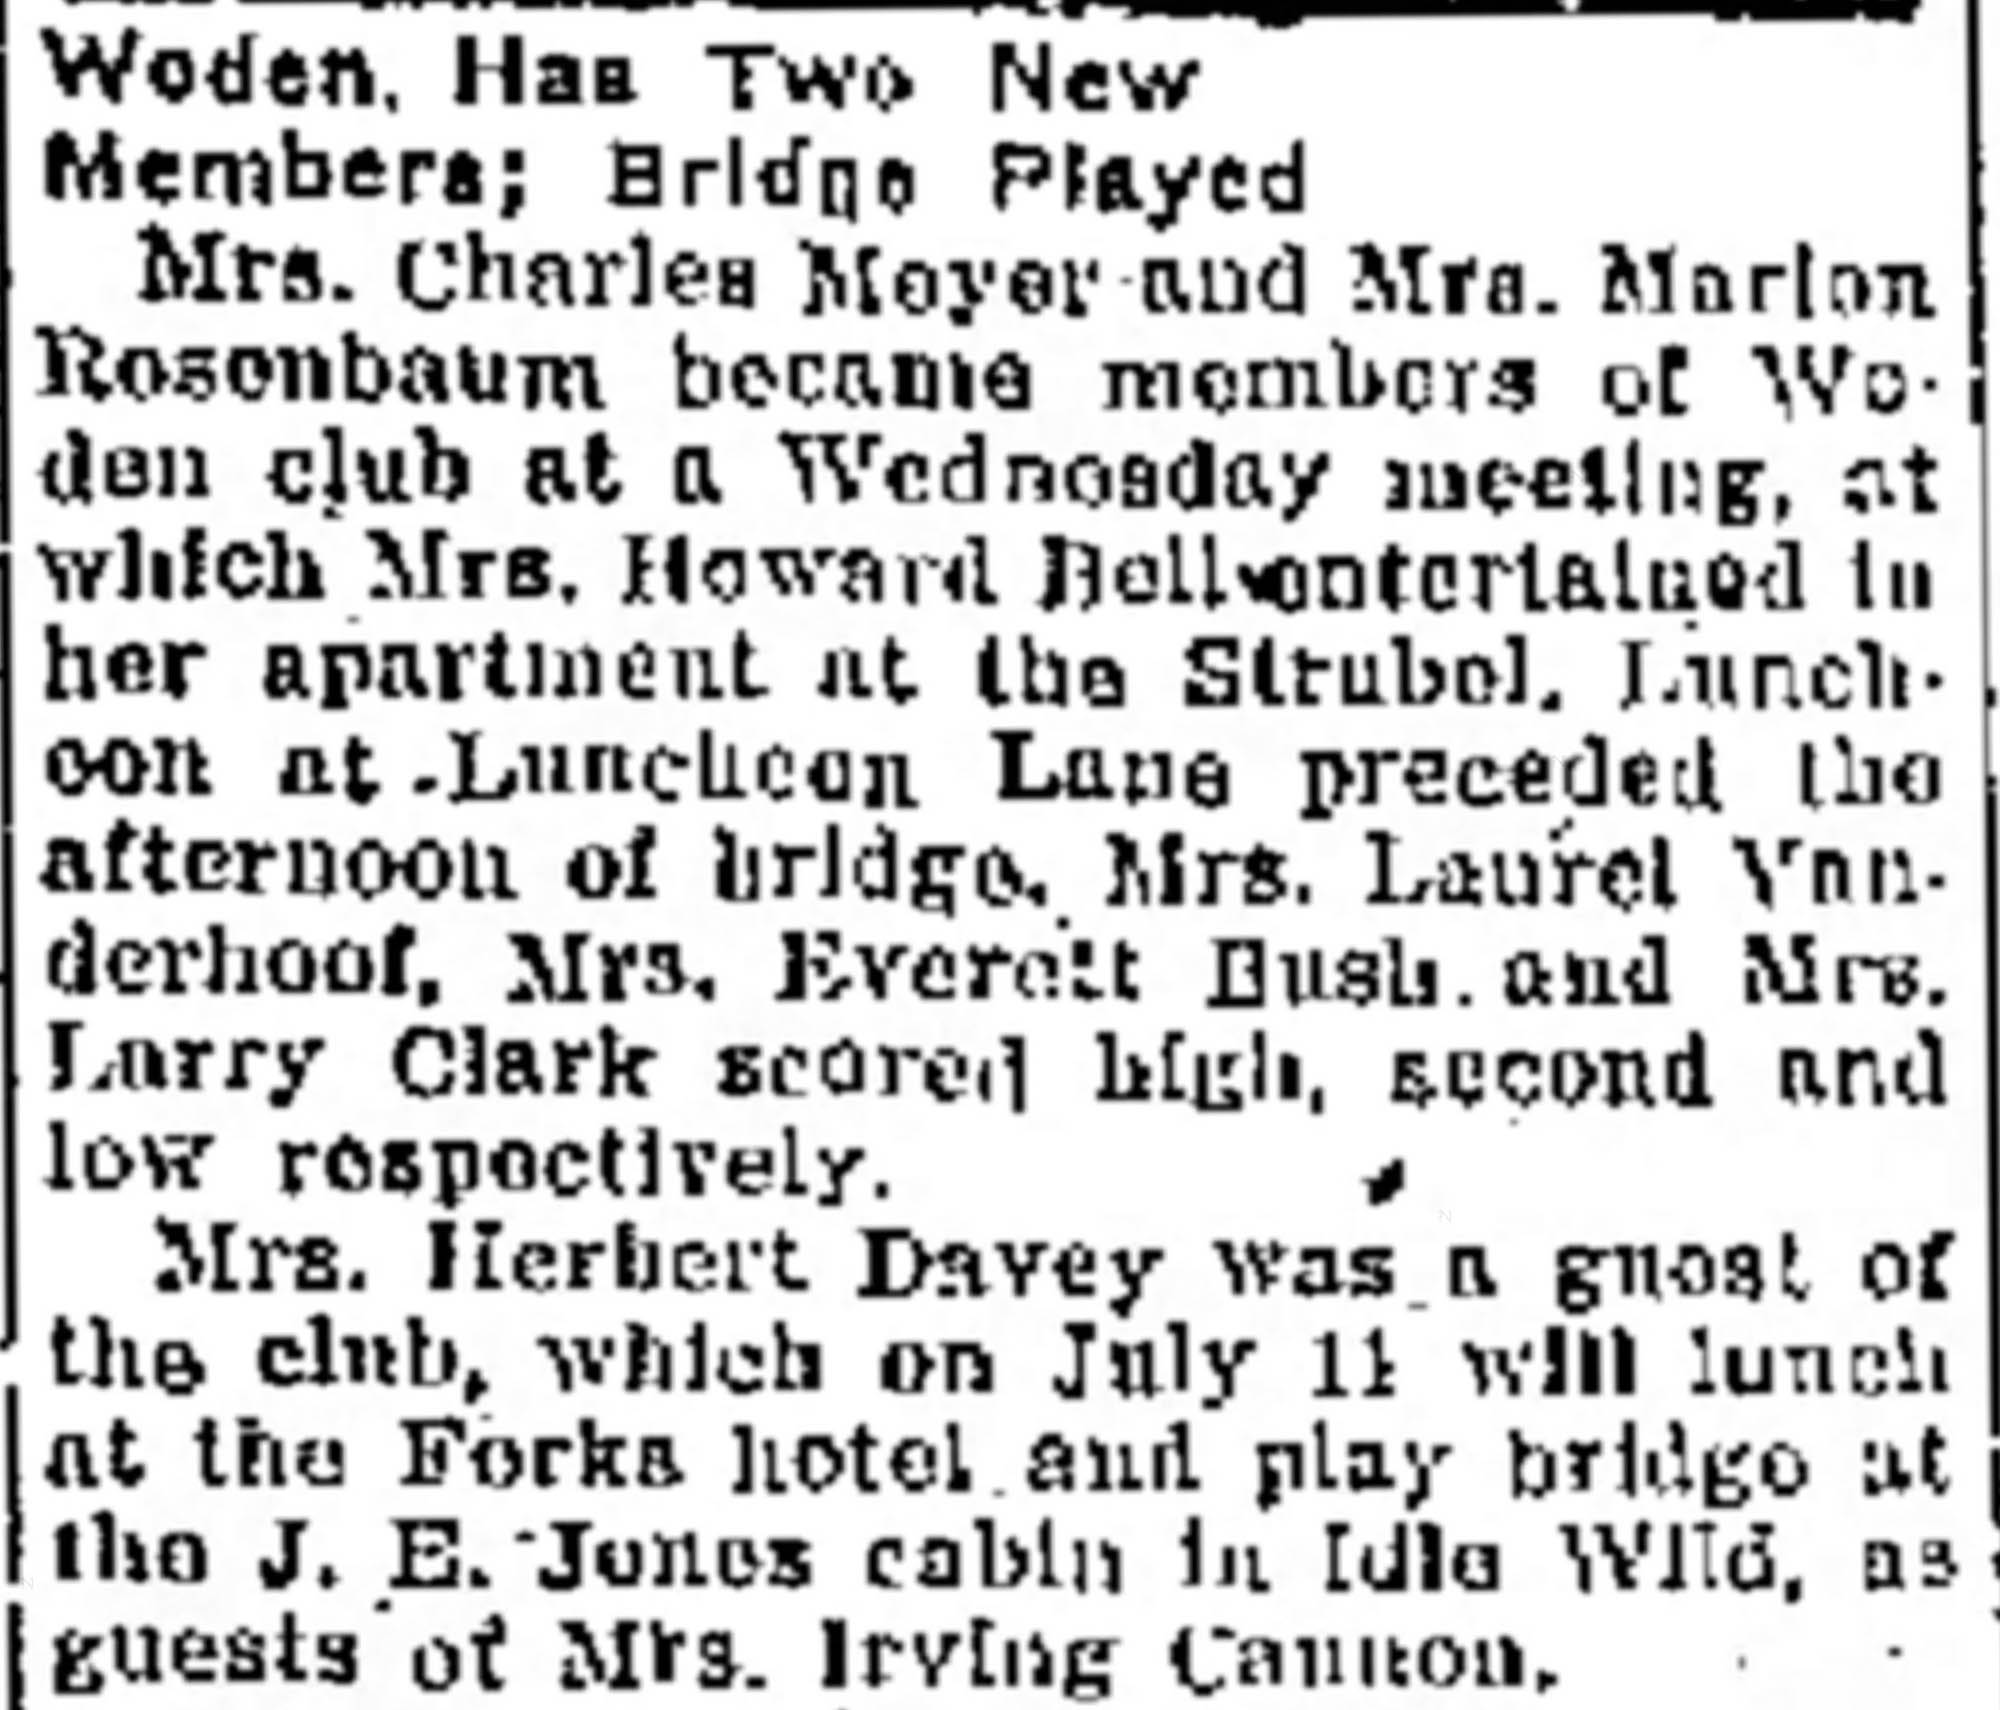 Idlewild Lodge - idlewildlodge.github.io - 1934-06-29 - Greeley Daily Tribune - Woden Club At Jones Cabin